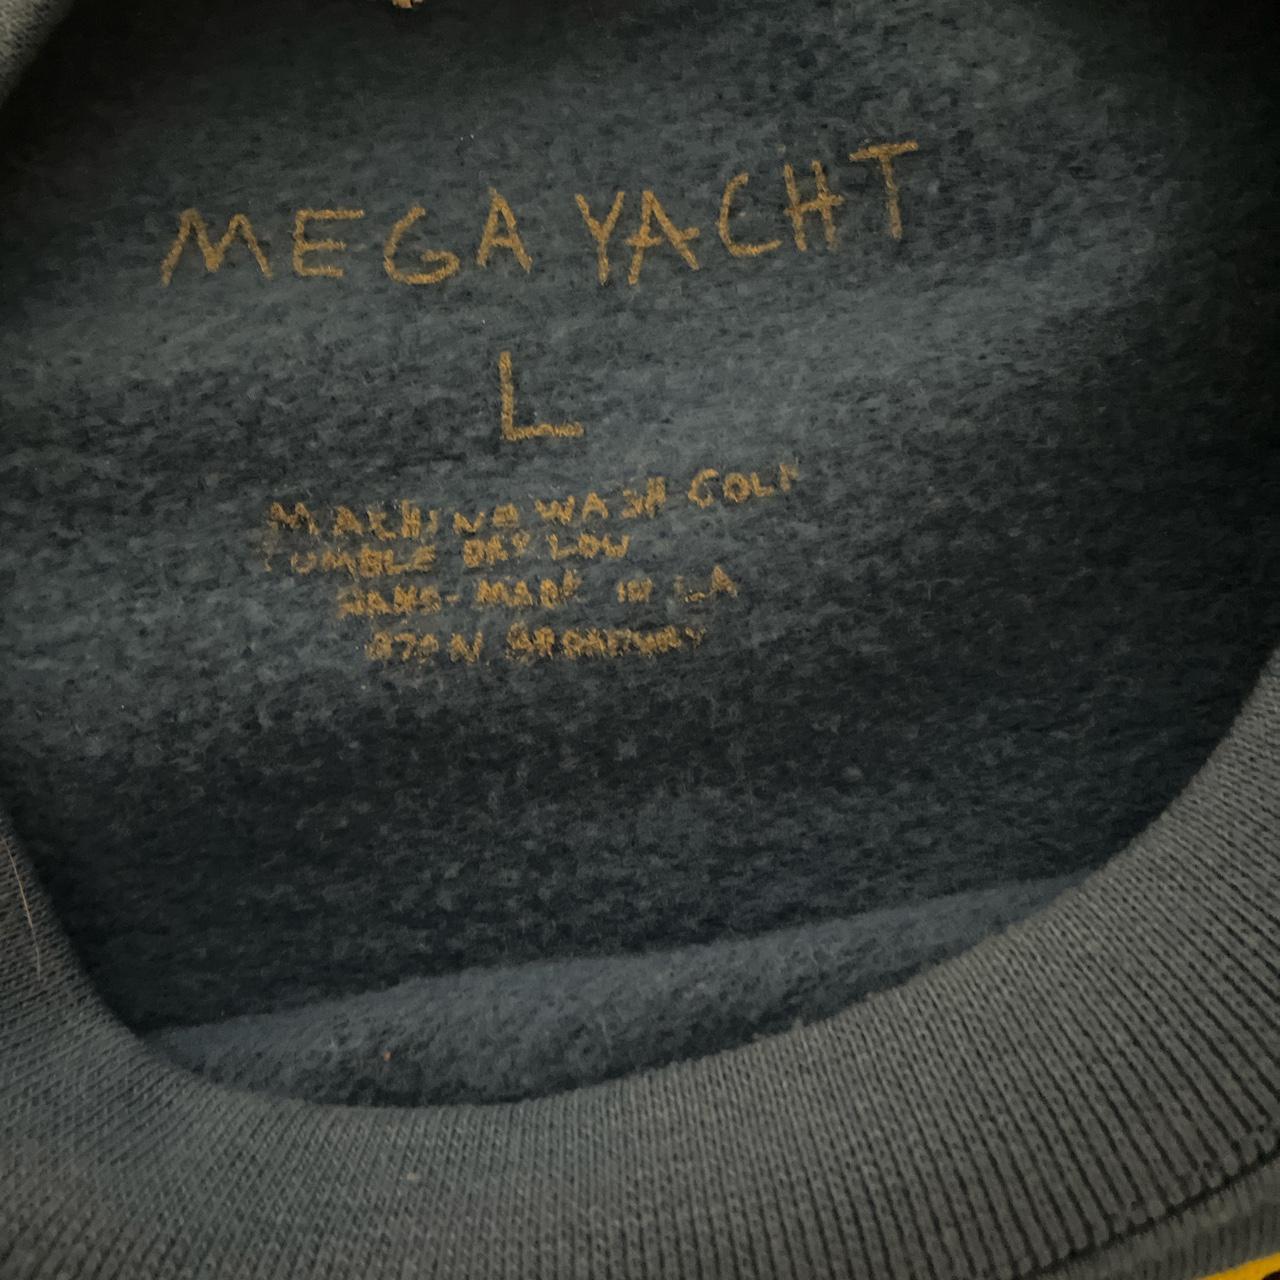 Mega Yacht Casper tee size XXL (og photo used, shirt - Depop